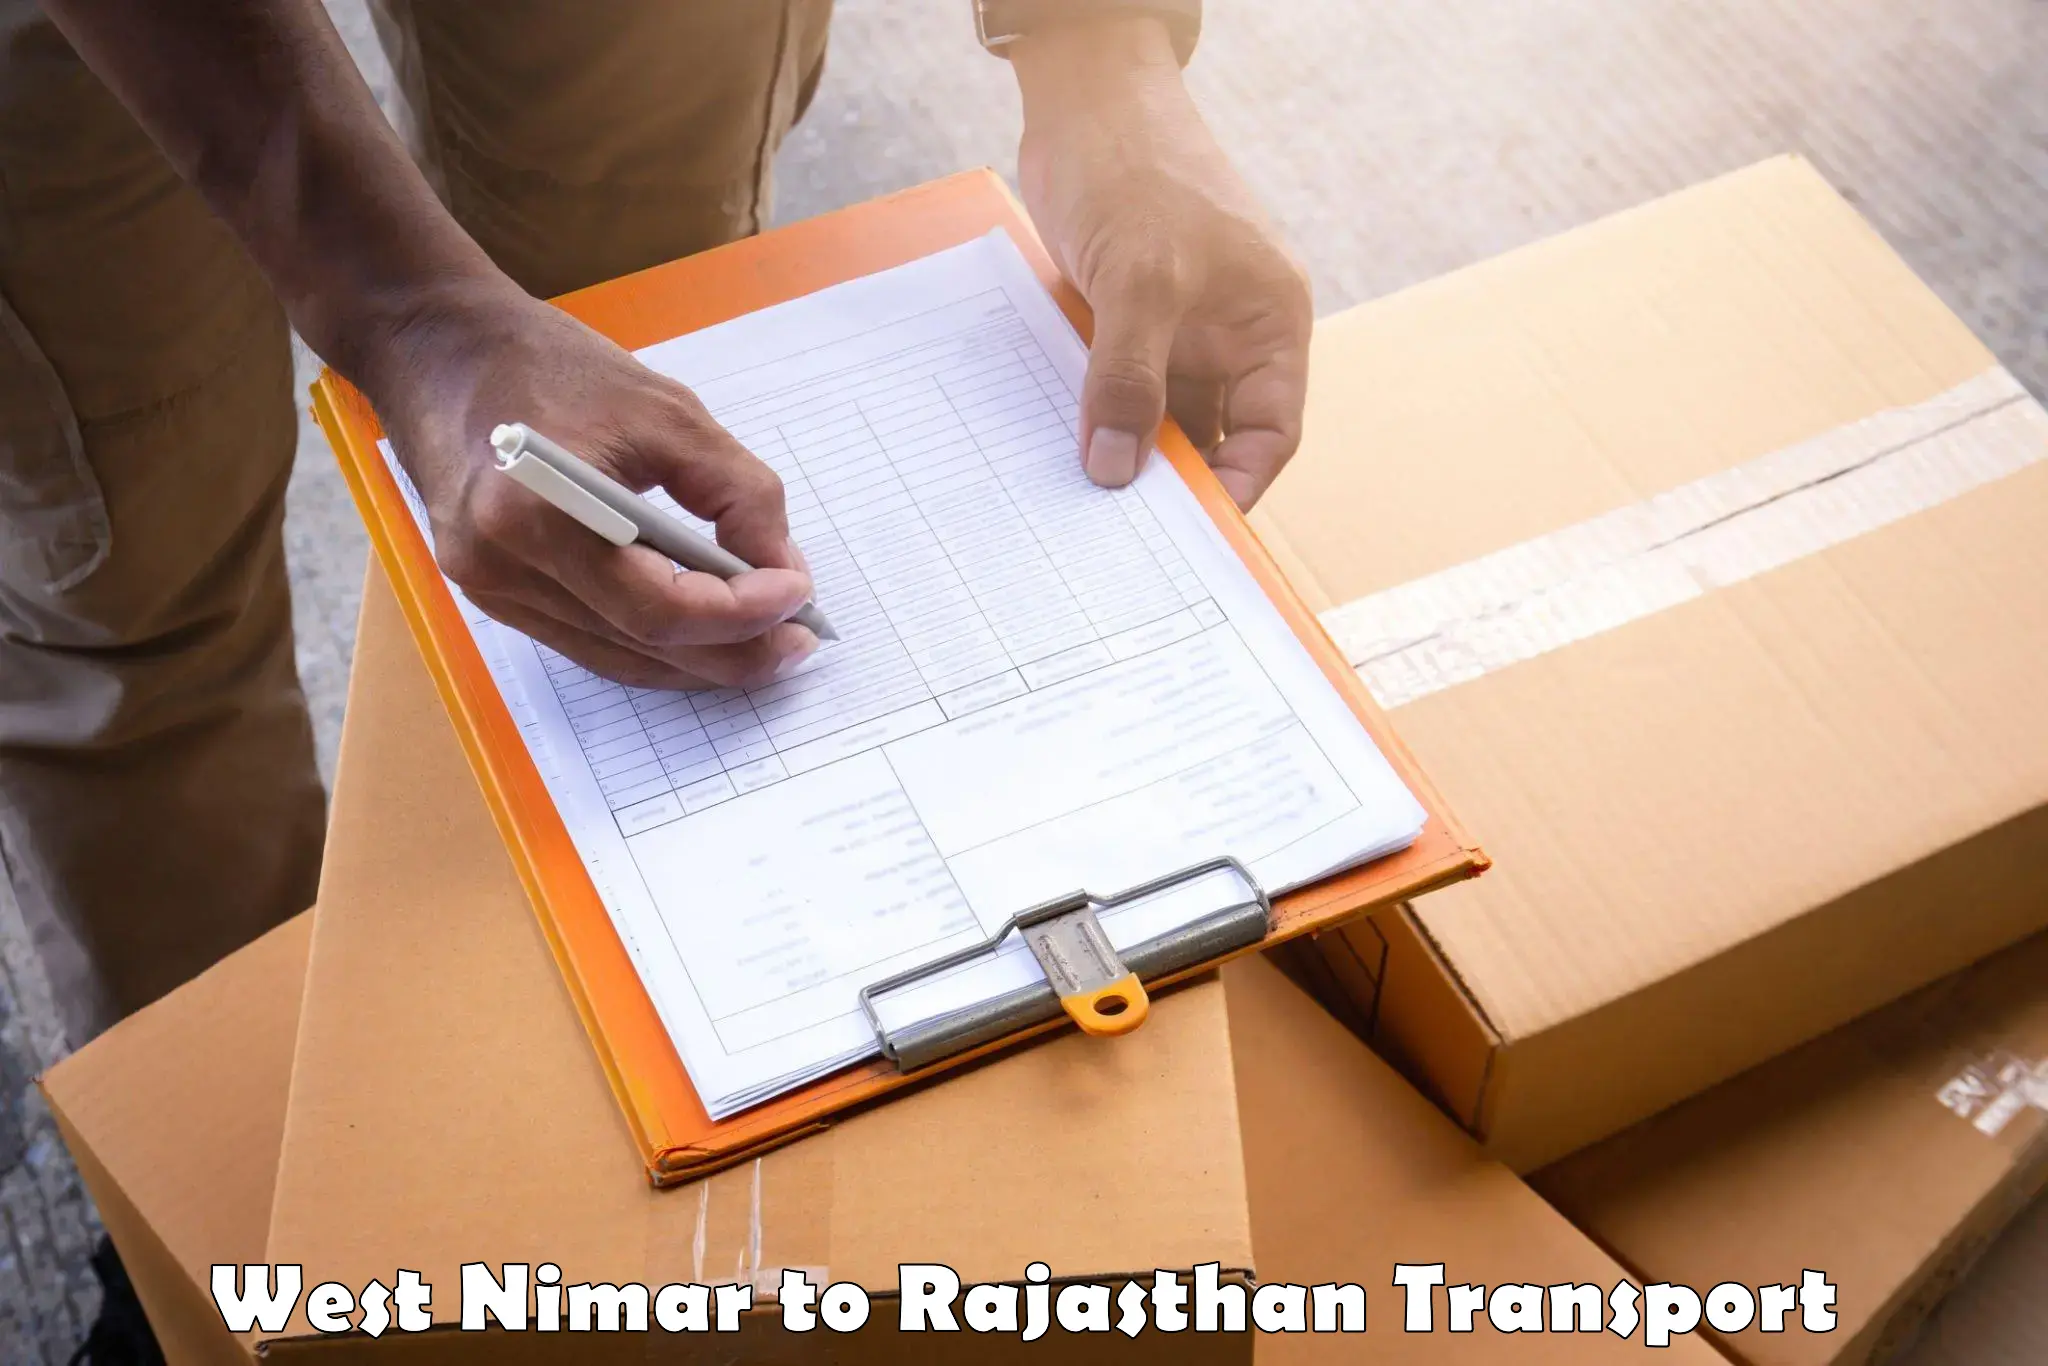 Truck transport companies in India West Nimar to Kishangarh